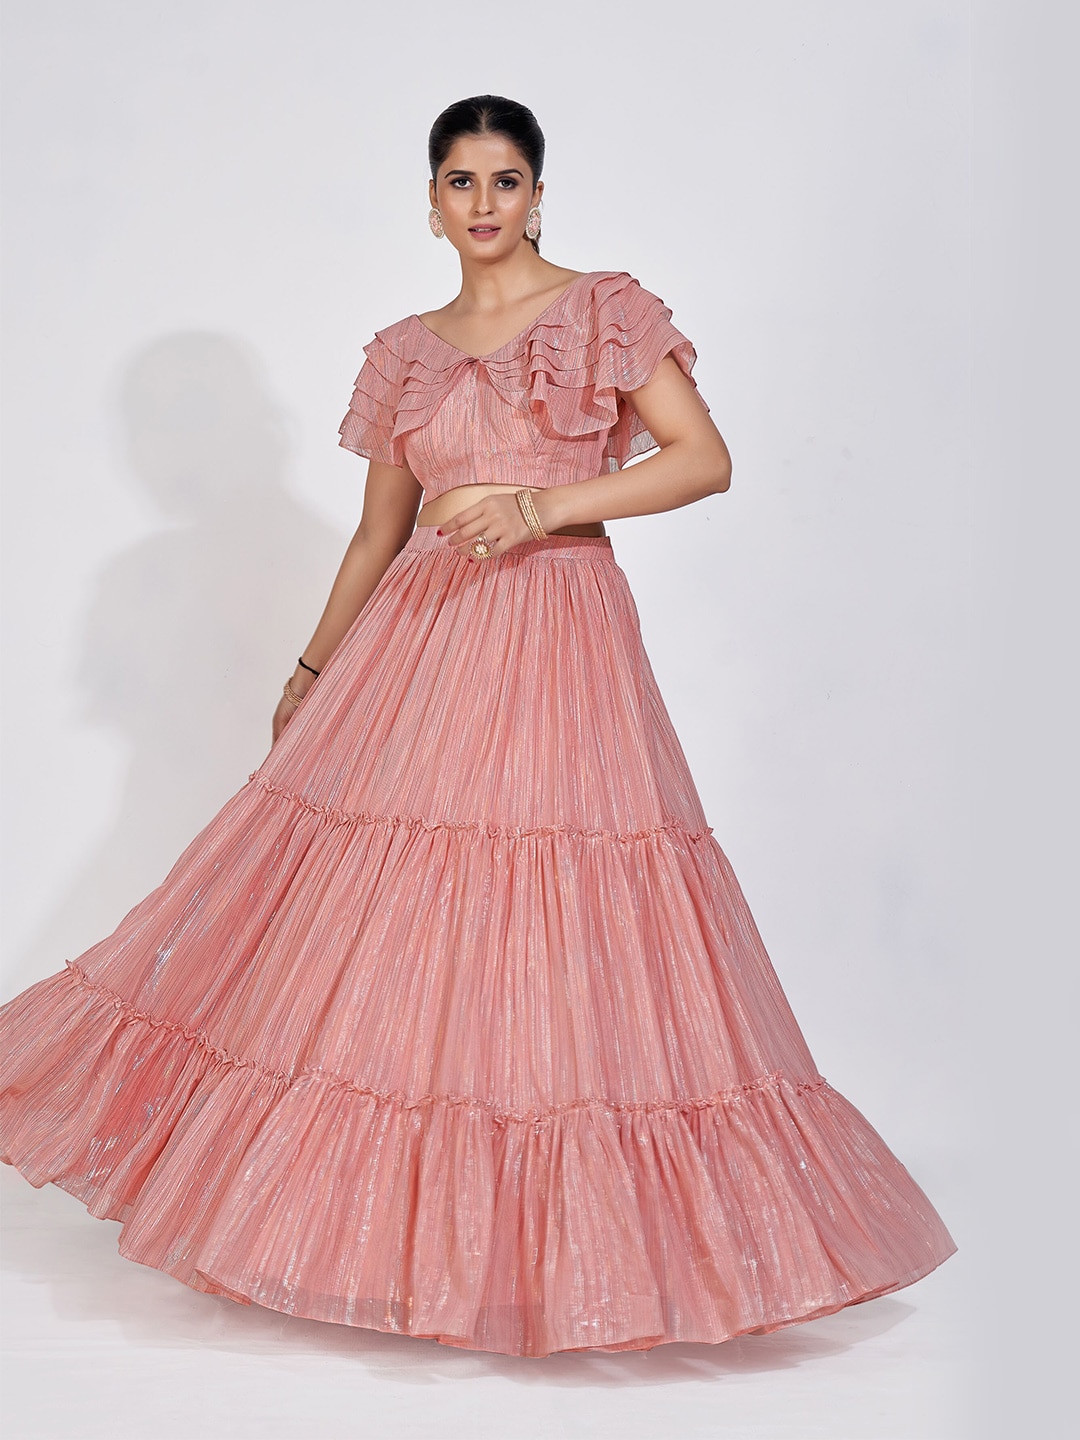 DRESSTIVE Pink Printed Ready to Wear Lehenga & Price in India